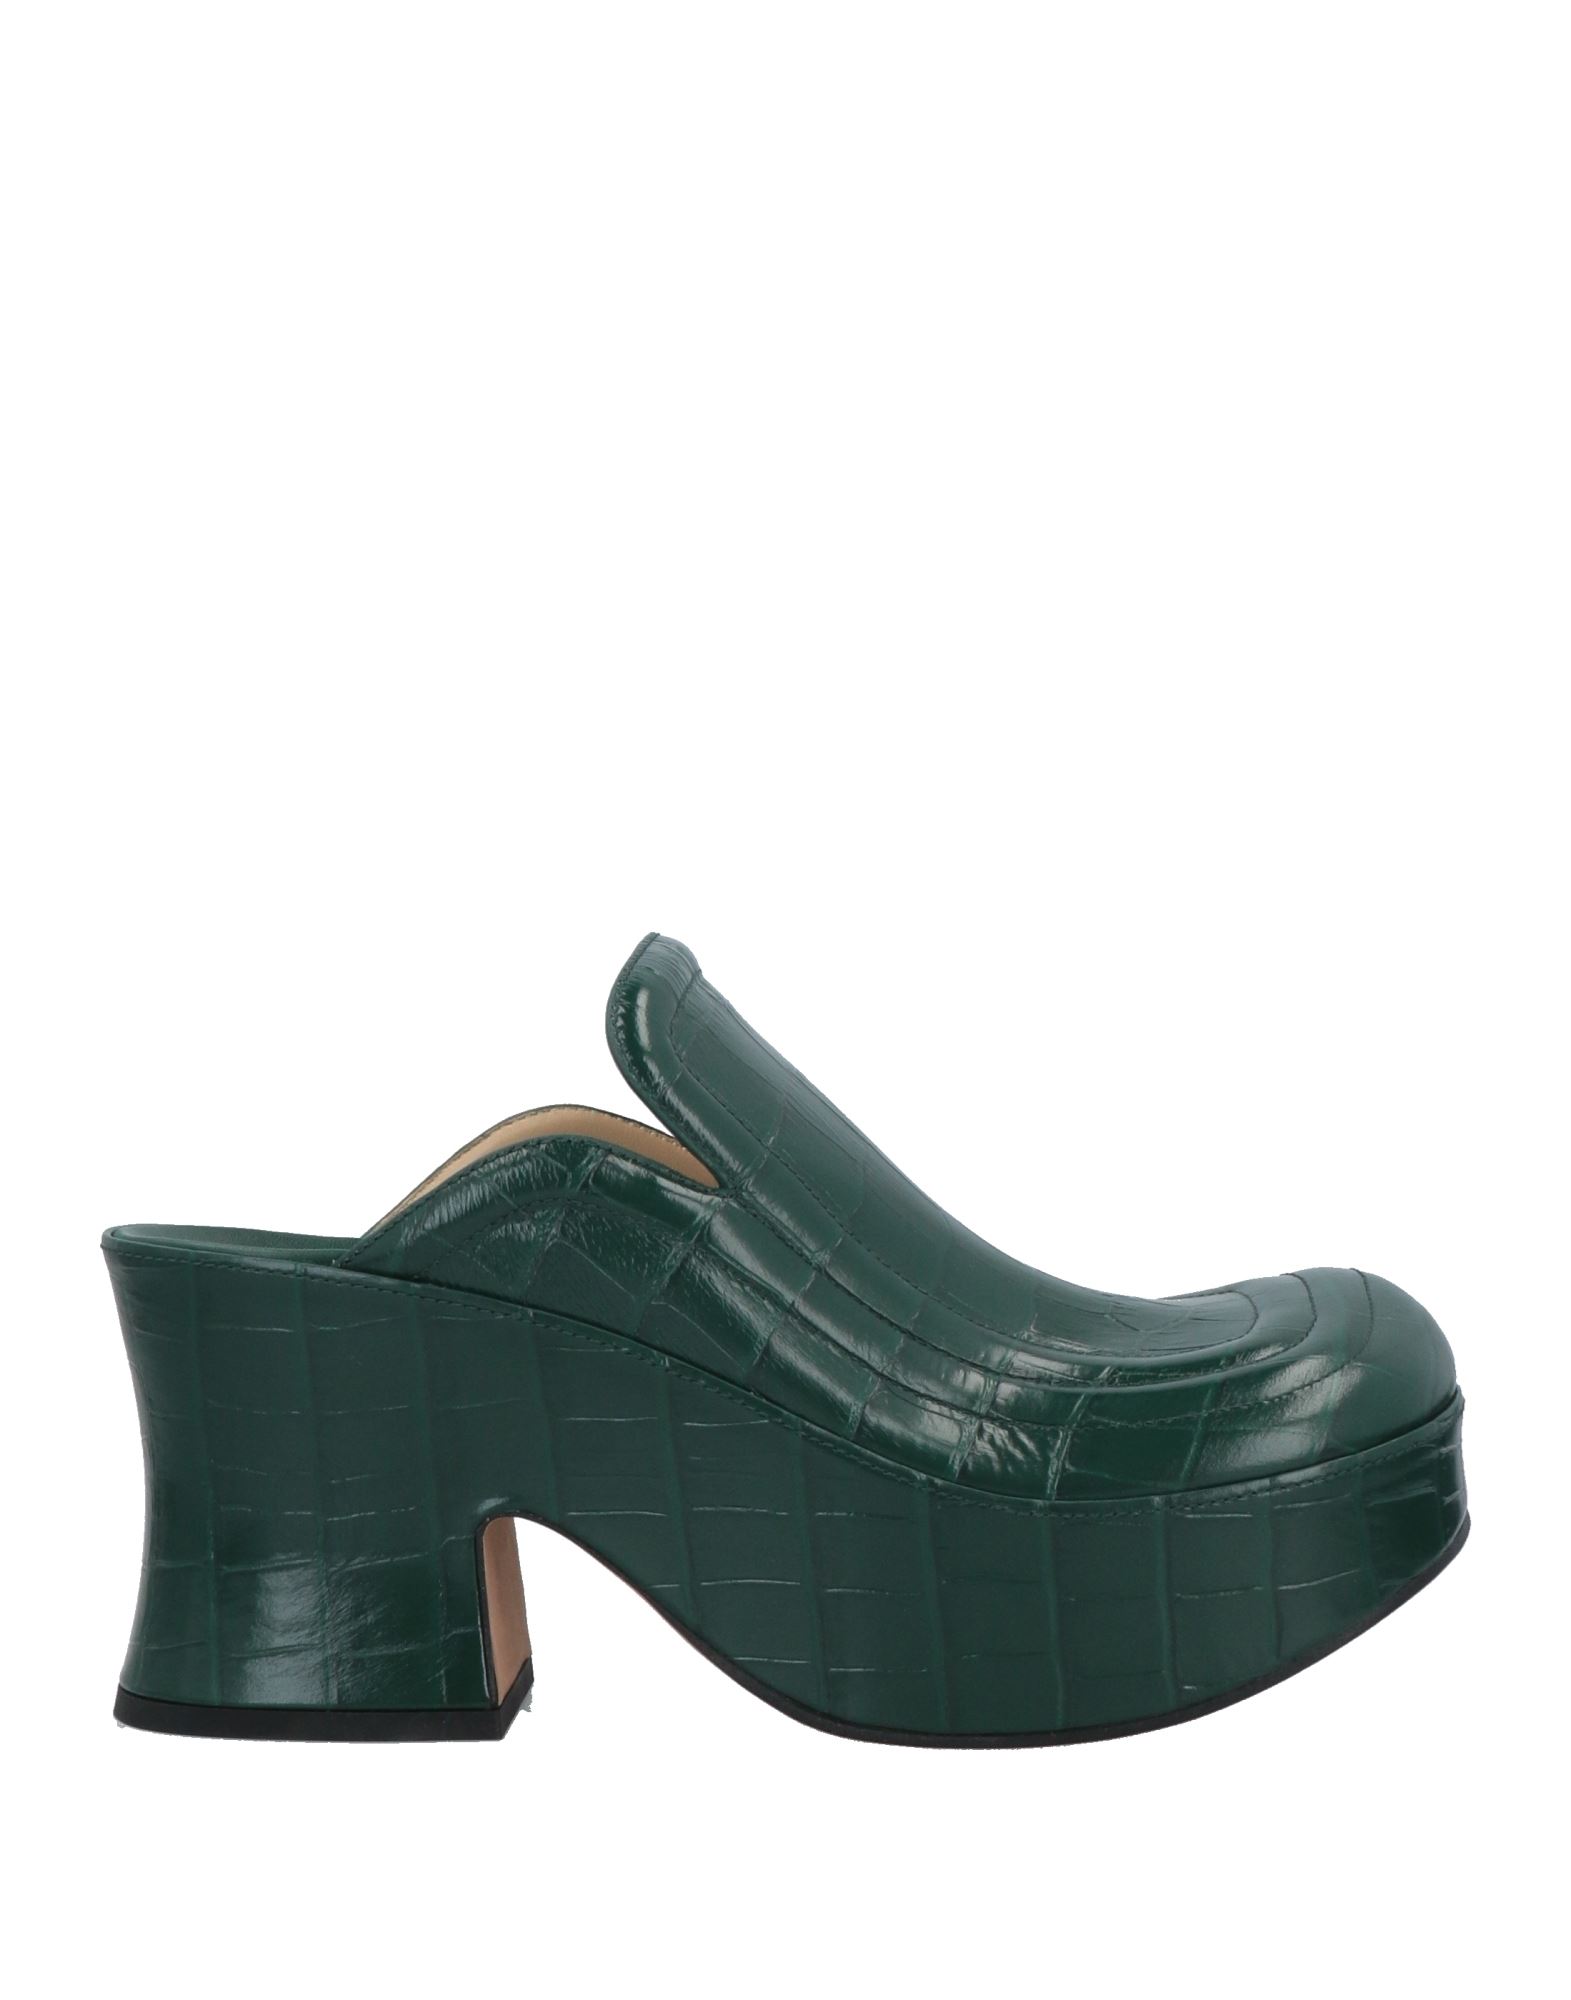 Bottega Veneta Woman Mules & Clogs Dark Green Size 8.5 Soft Leather